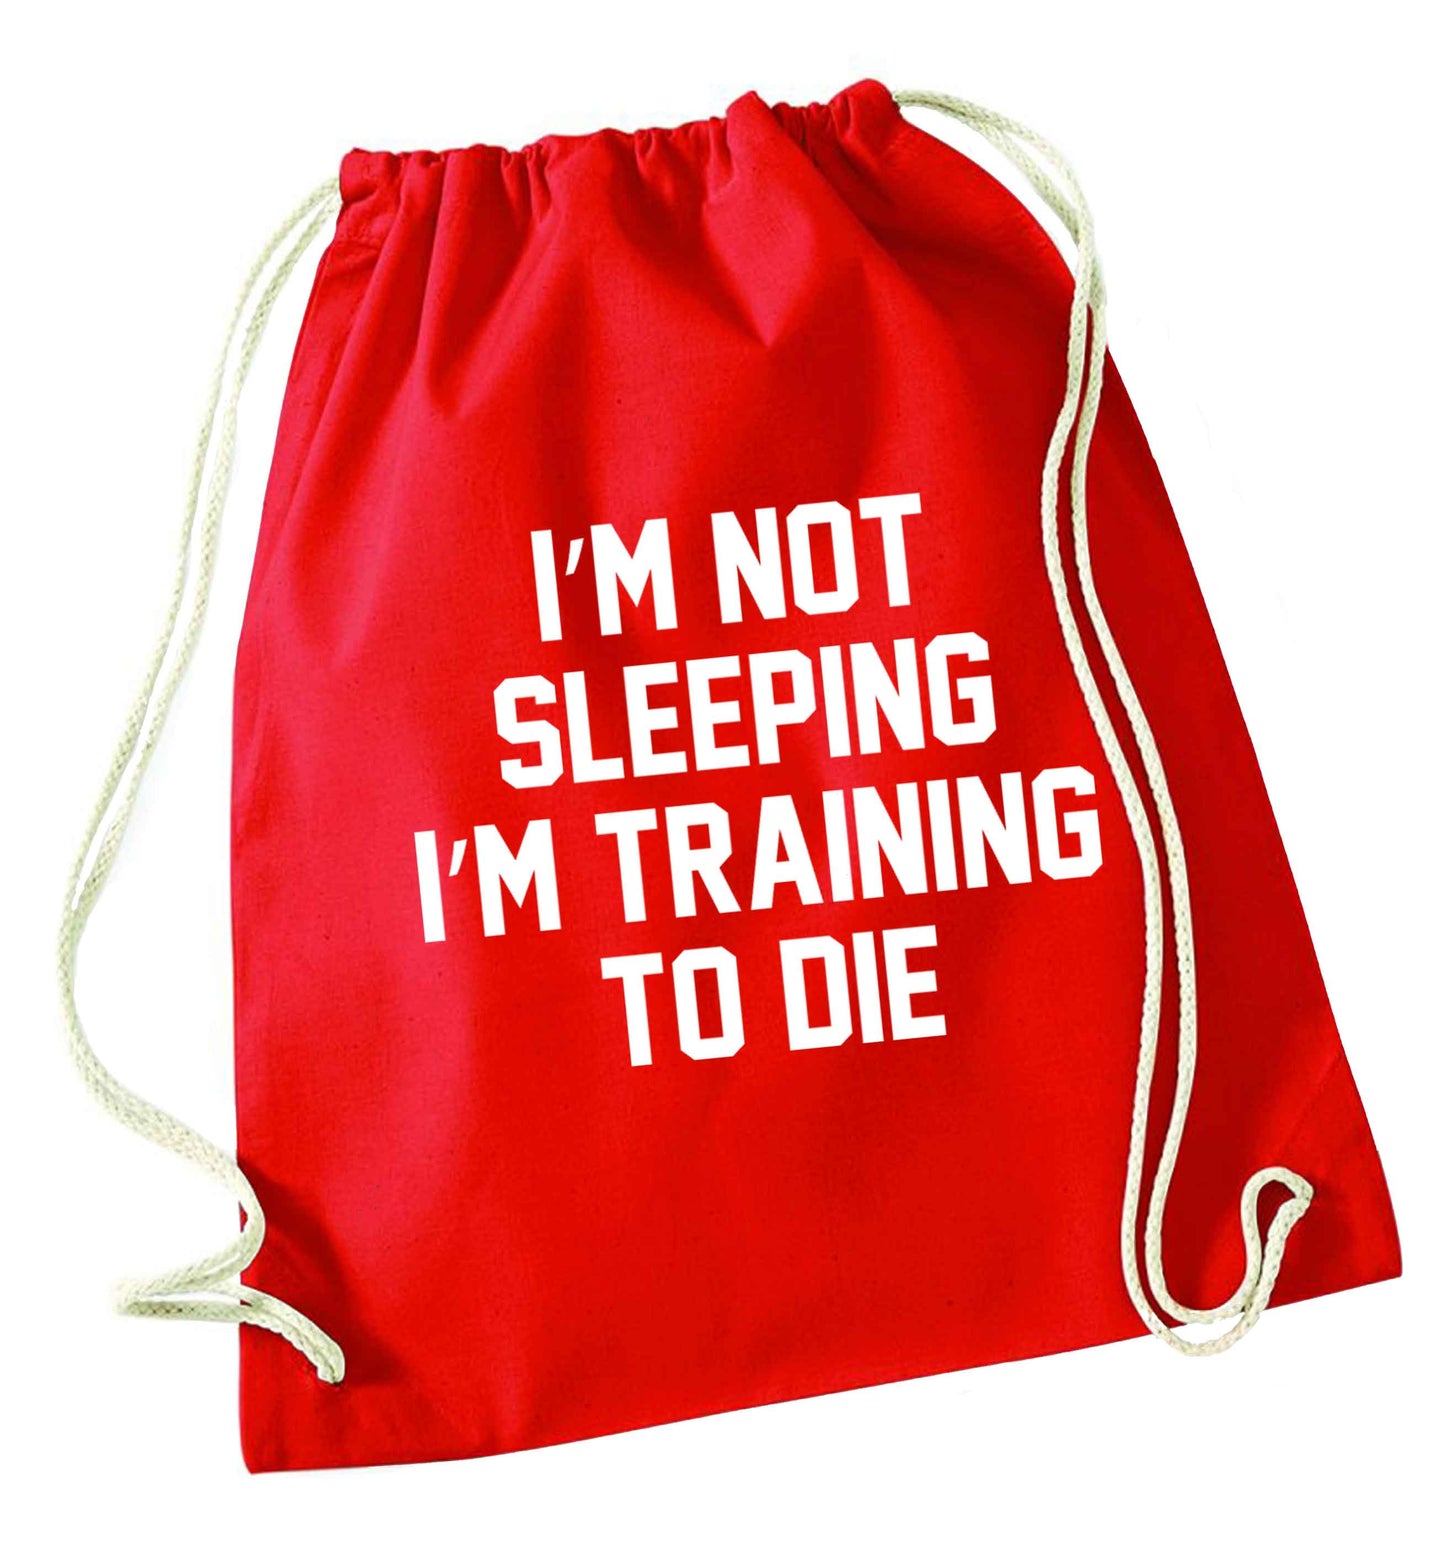 I'm not sleeping I'm training to die red drawstring bag 